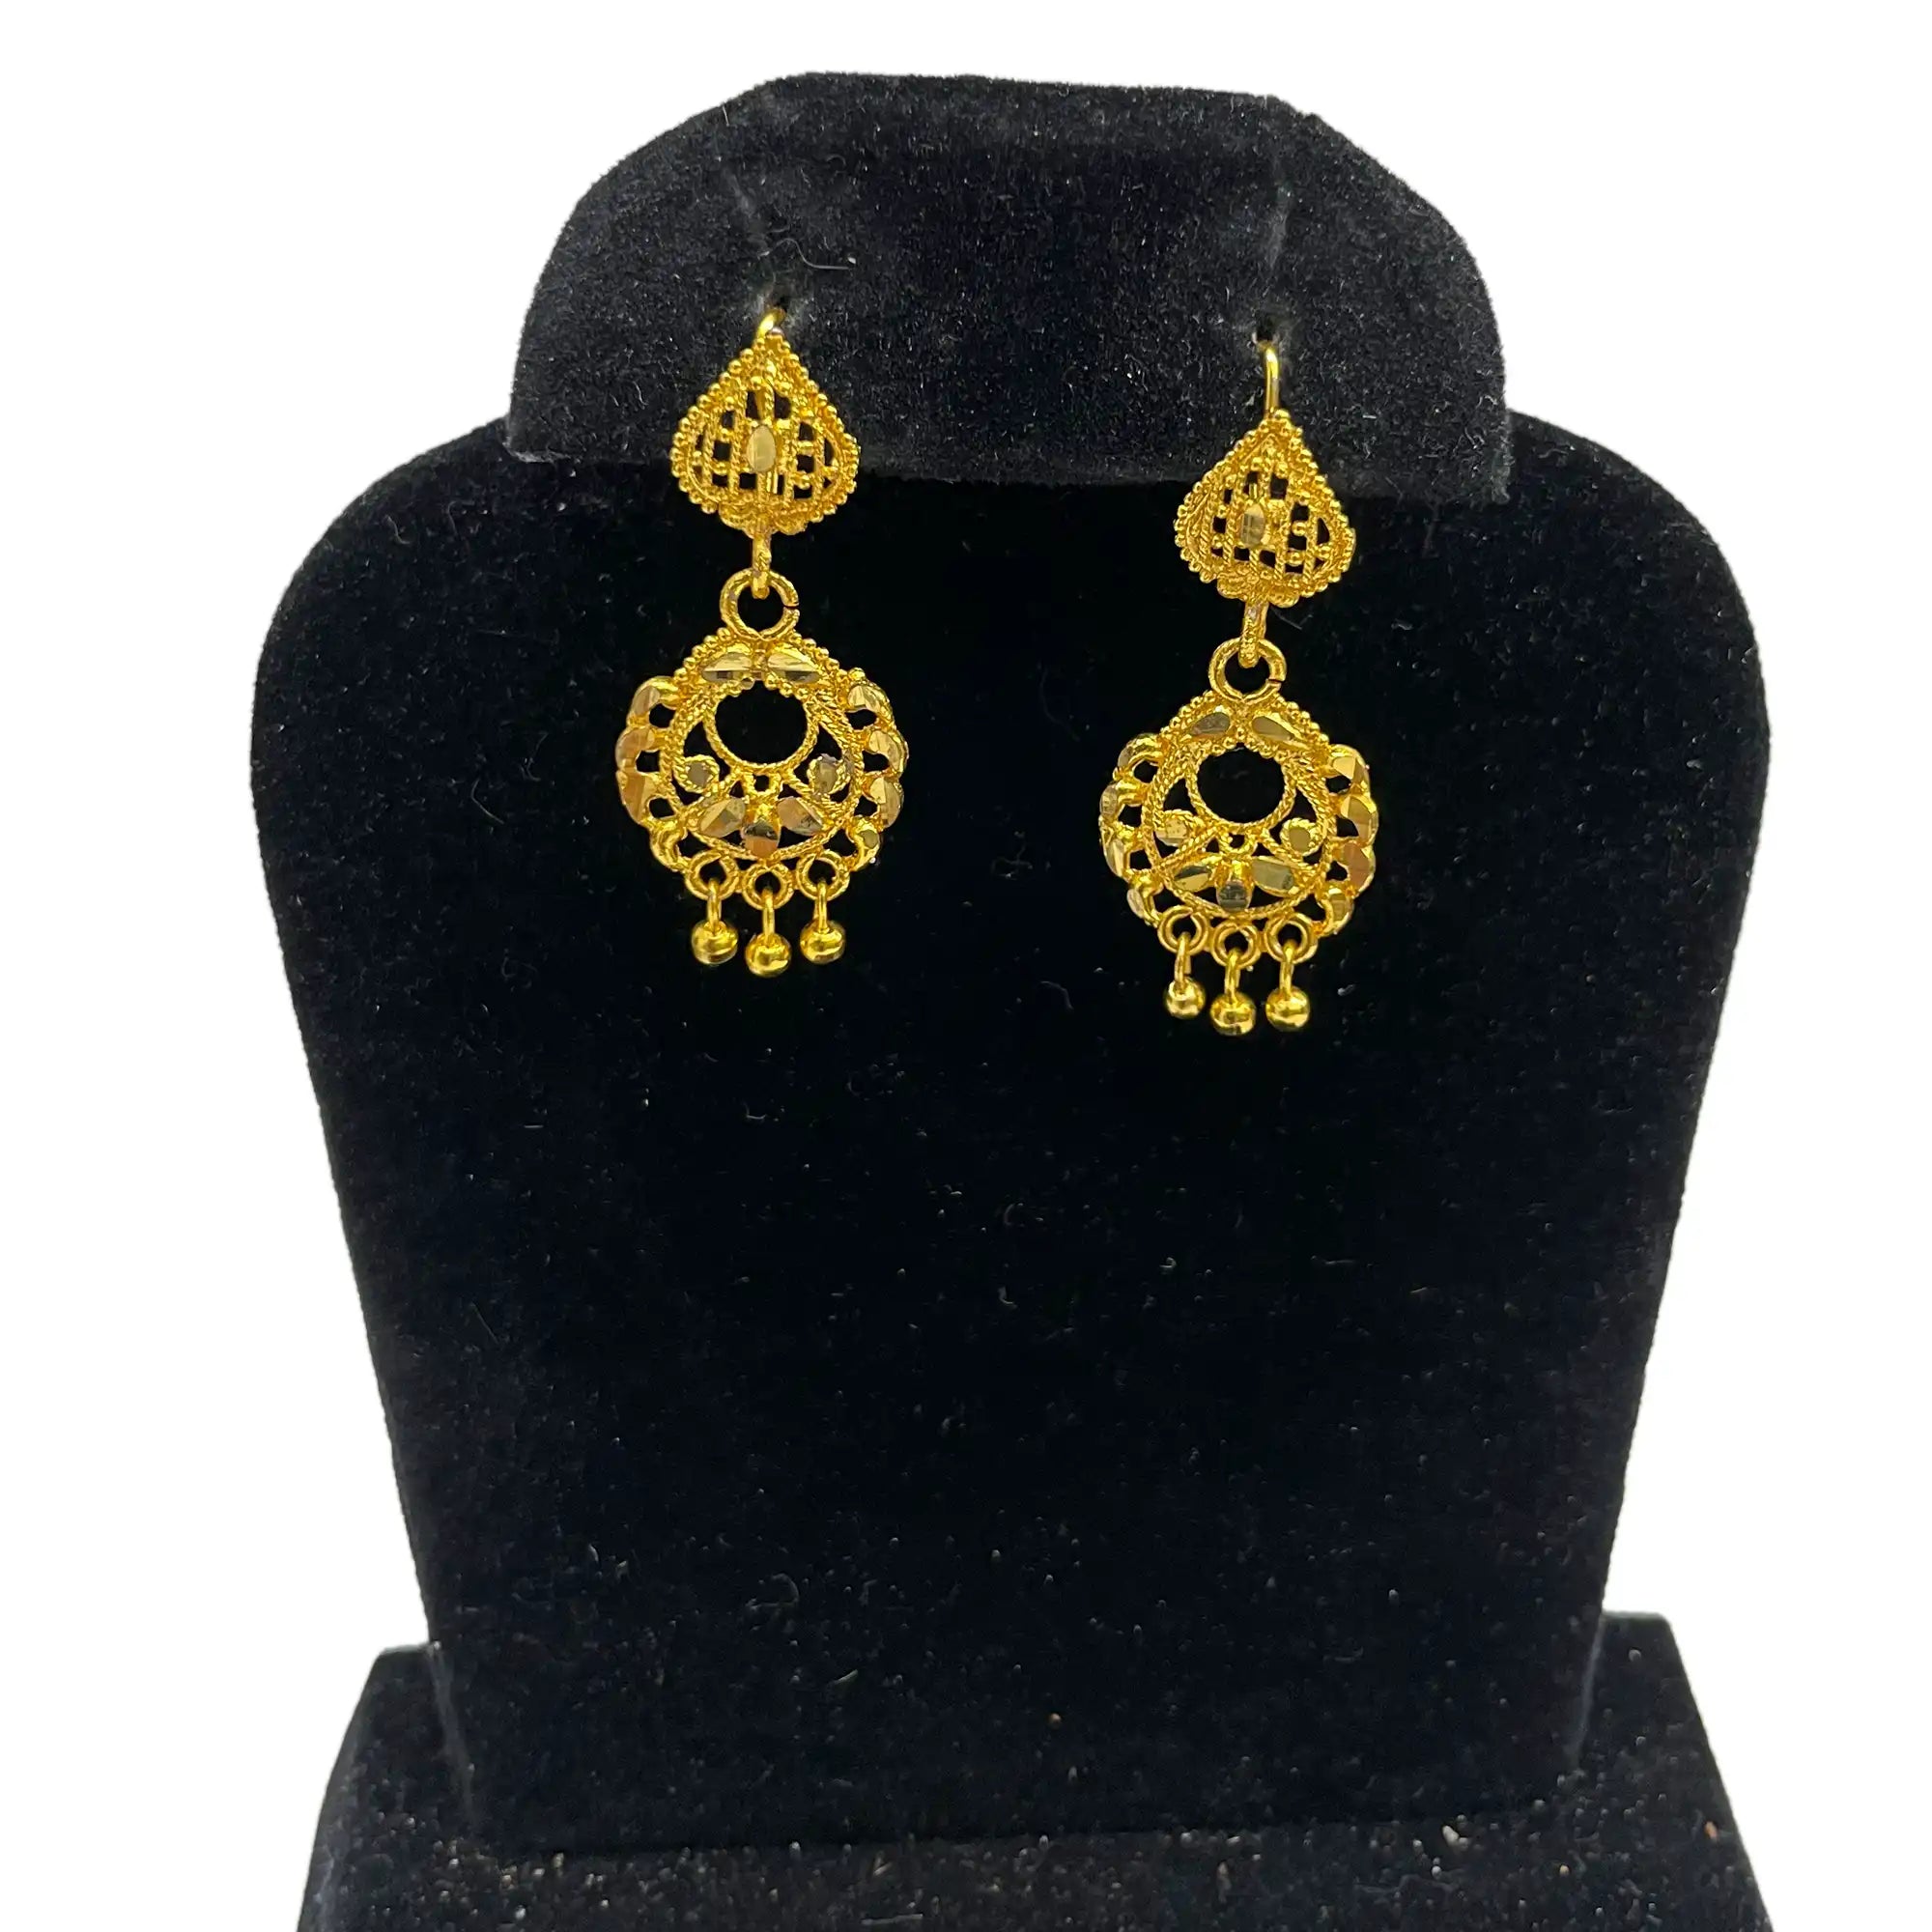 ethinic earrings, gold plating, bollyeood earings, handcrafted earrings